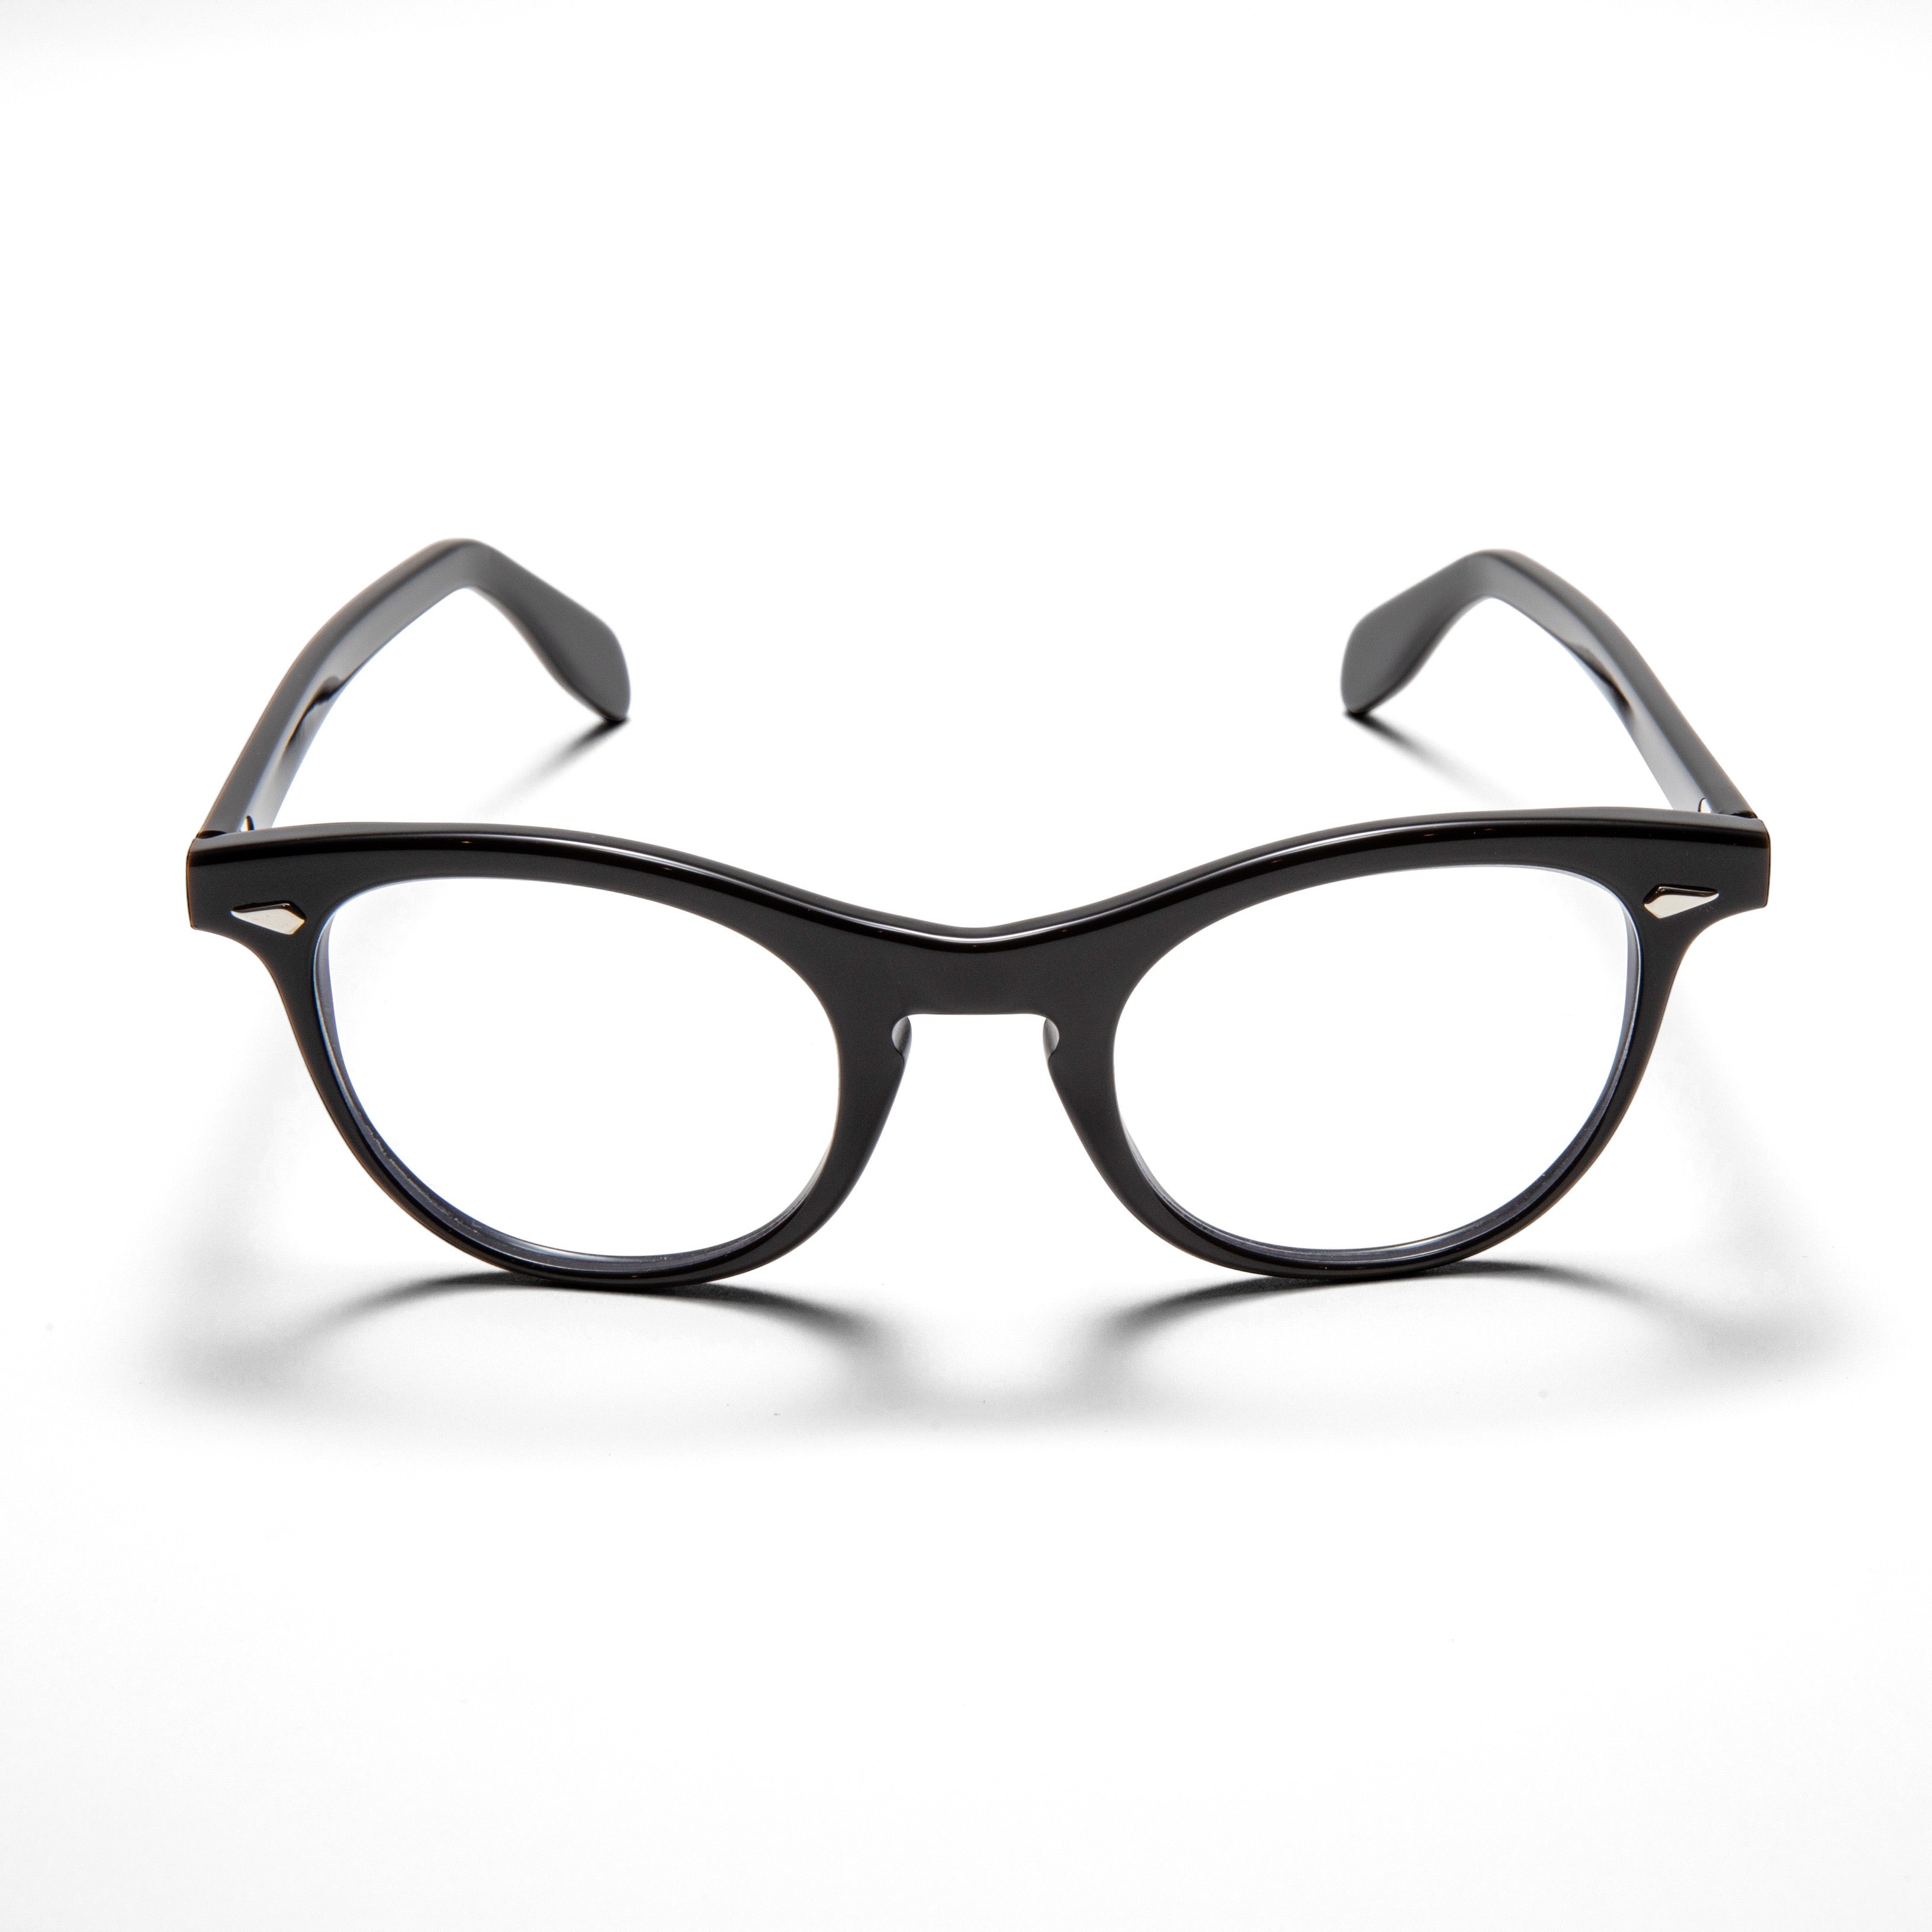 Tart Optical: The Online Classic Eyewear Store – Tart Optical